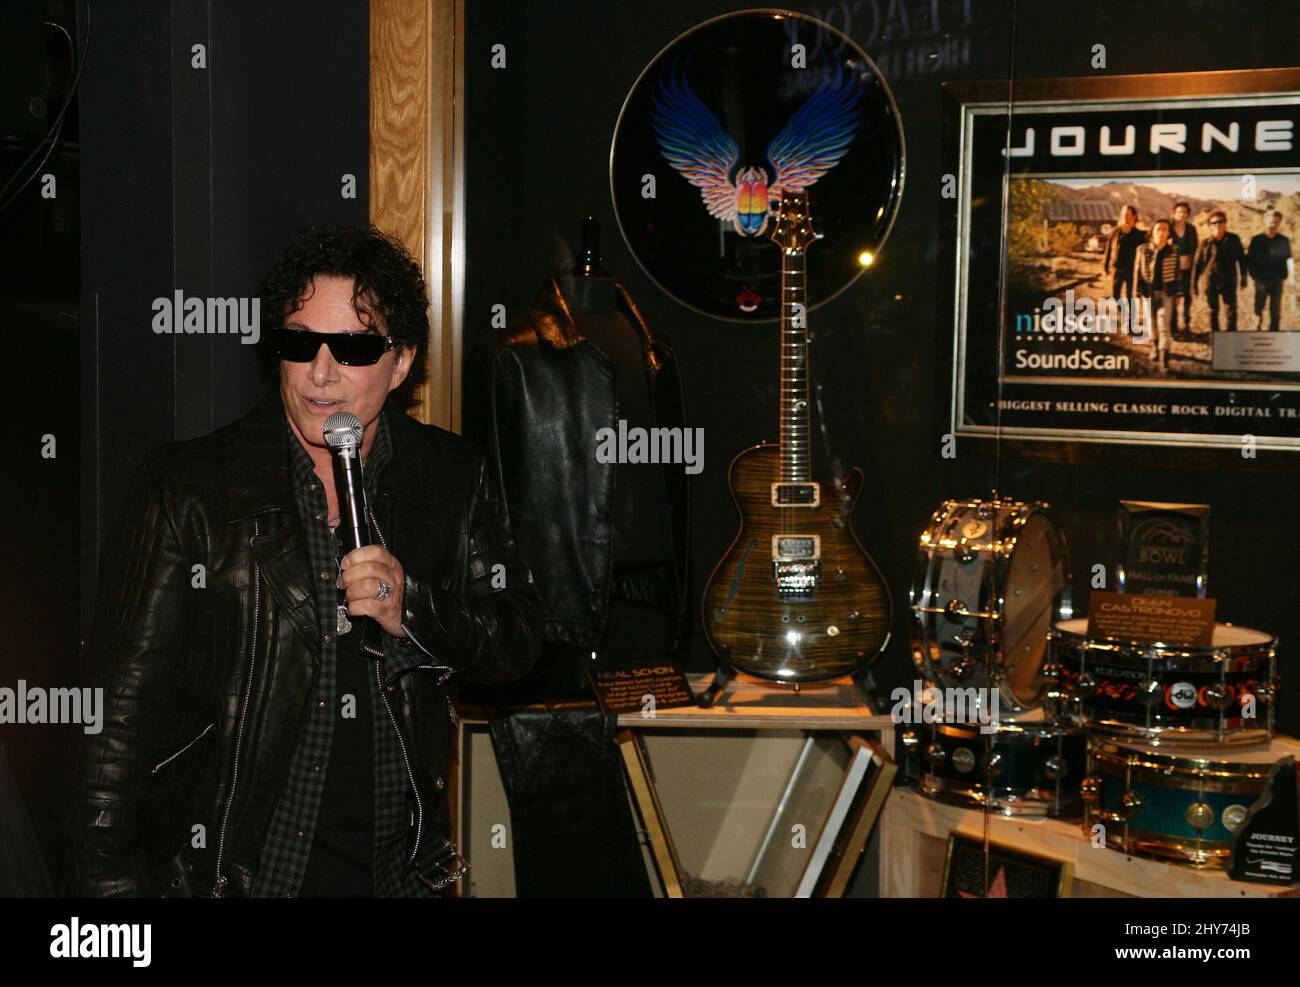 Neal Schon as Journey and Neal Schon unveil memorabilia cases At Hard Rock Hotel & Casino, Las Vegas. Stock Photo